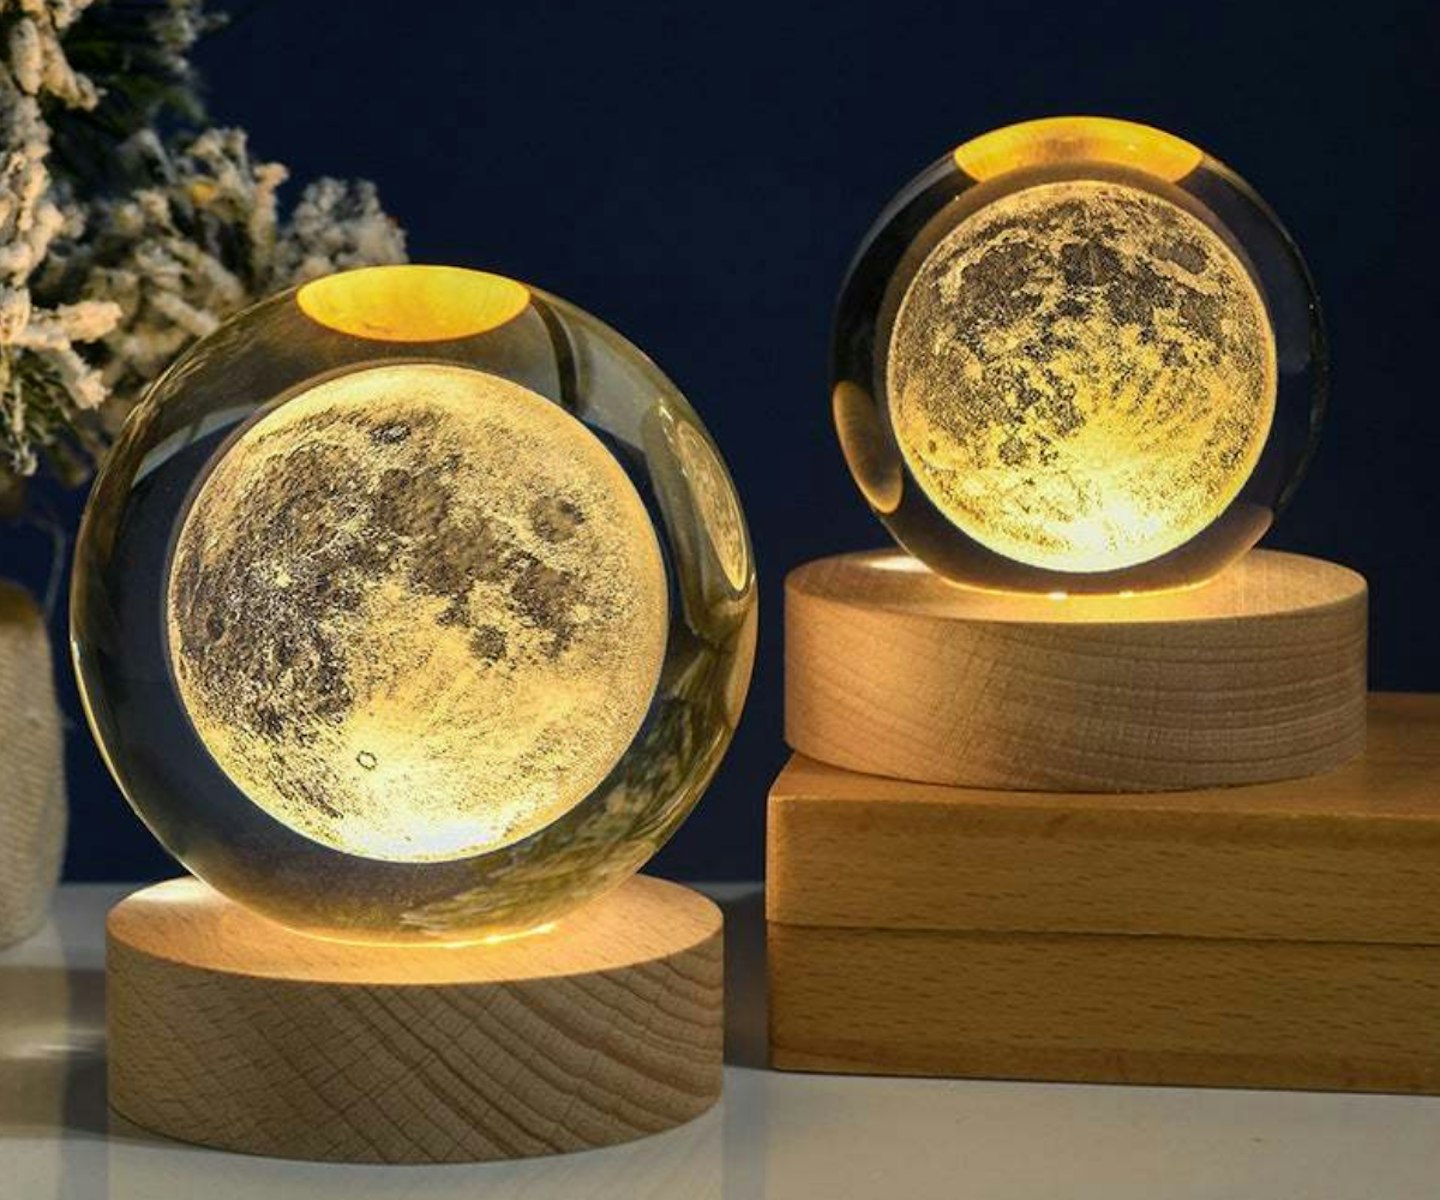 https://images.bauerhosting.com/marketing/sites/20/2022/05/best-moon-lamp-uk-11.png?auto=format&w=1440&q=80